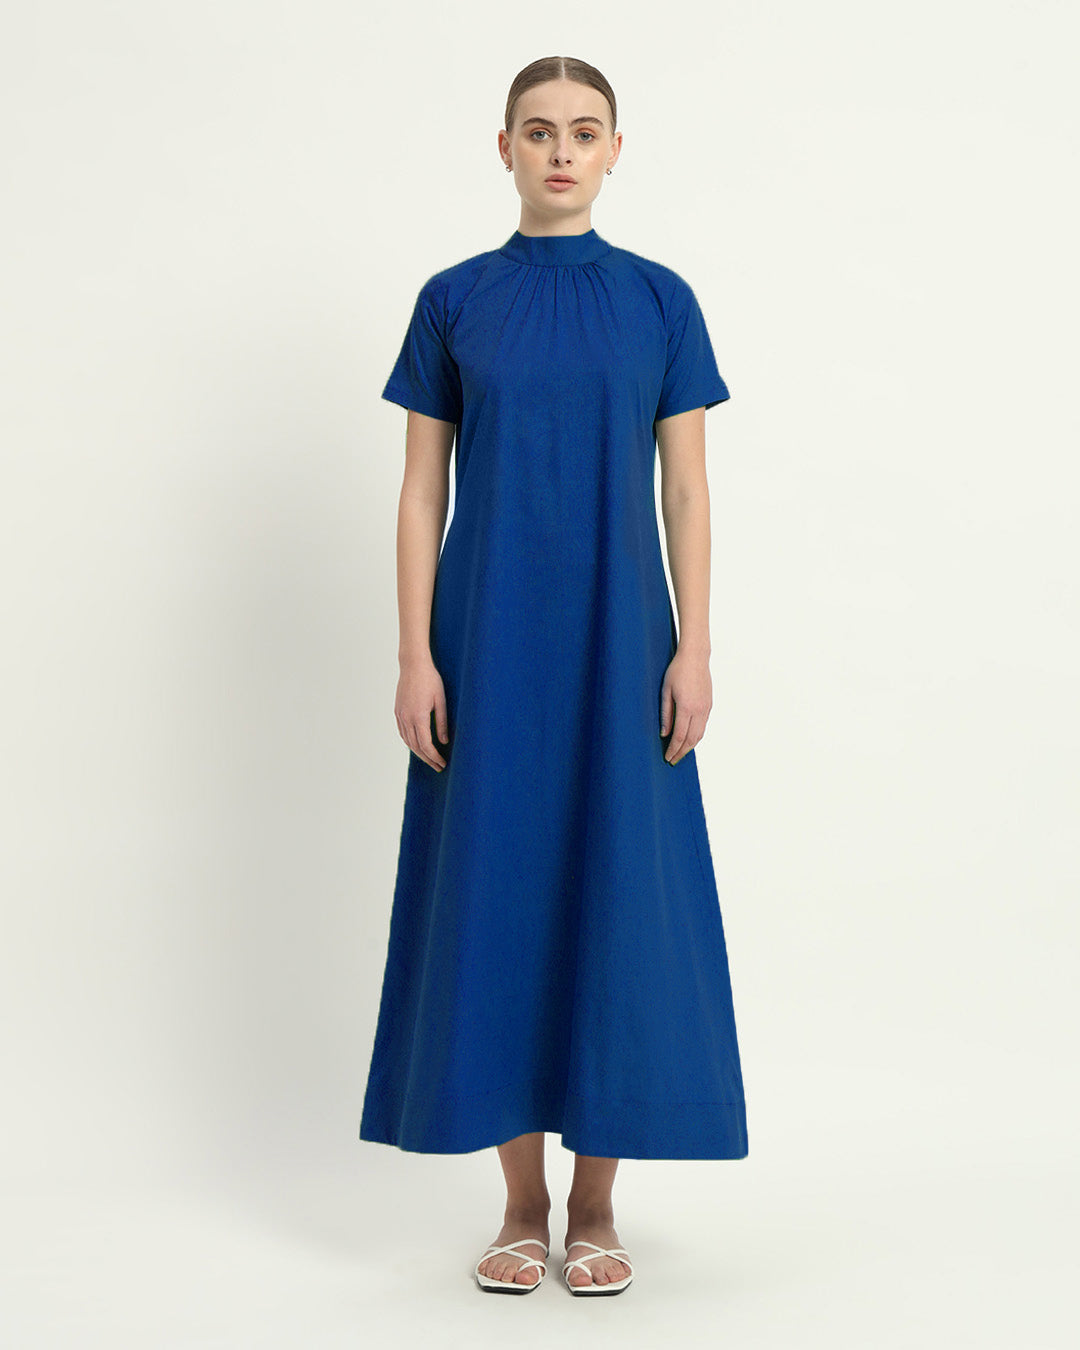 The Cobalt Hermon Cotton Dress